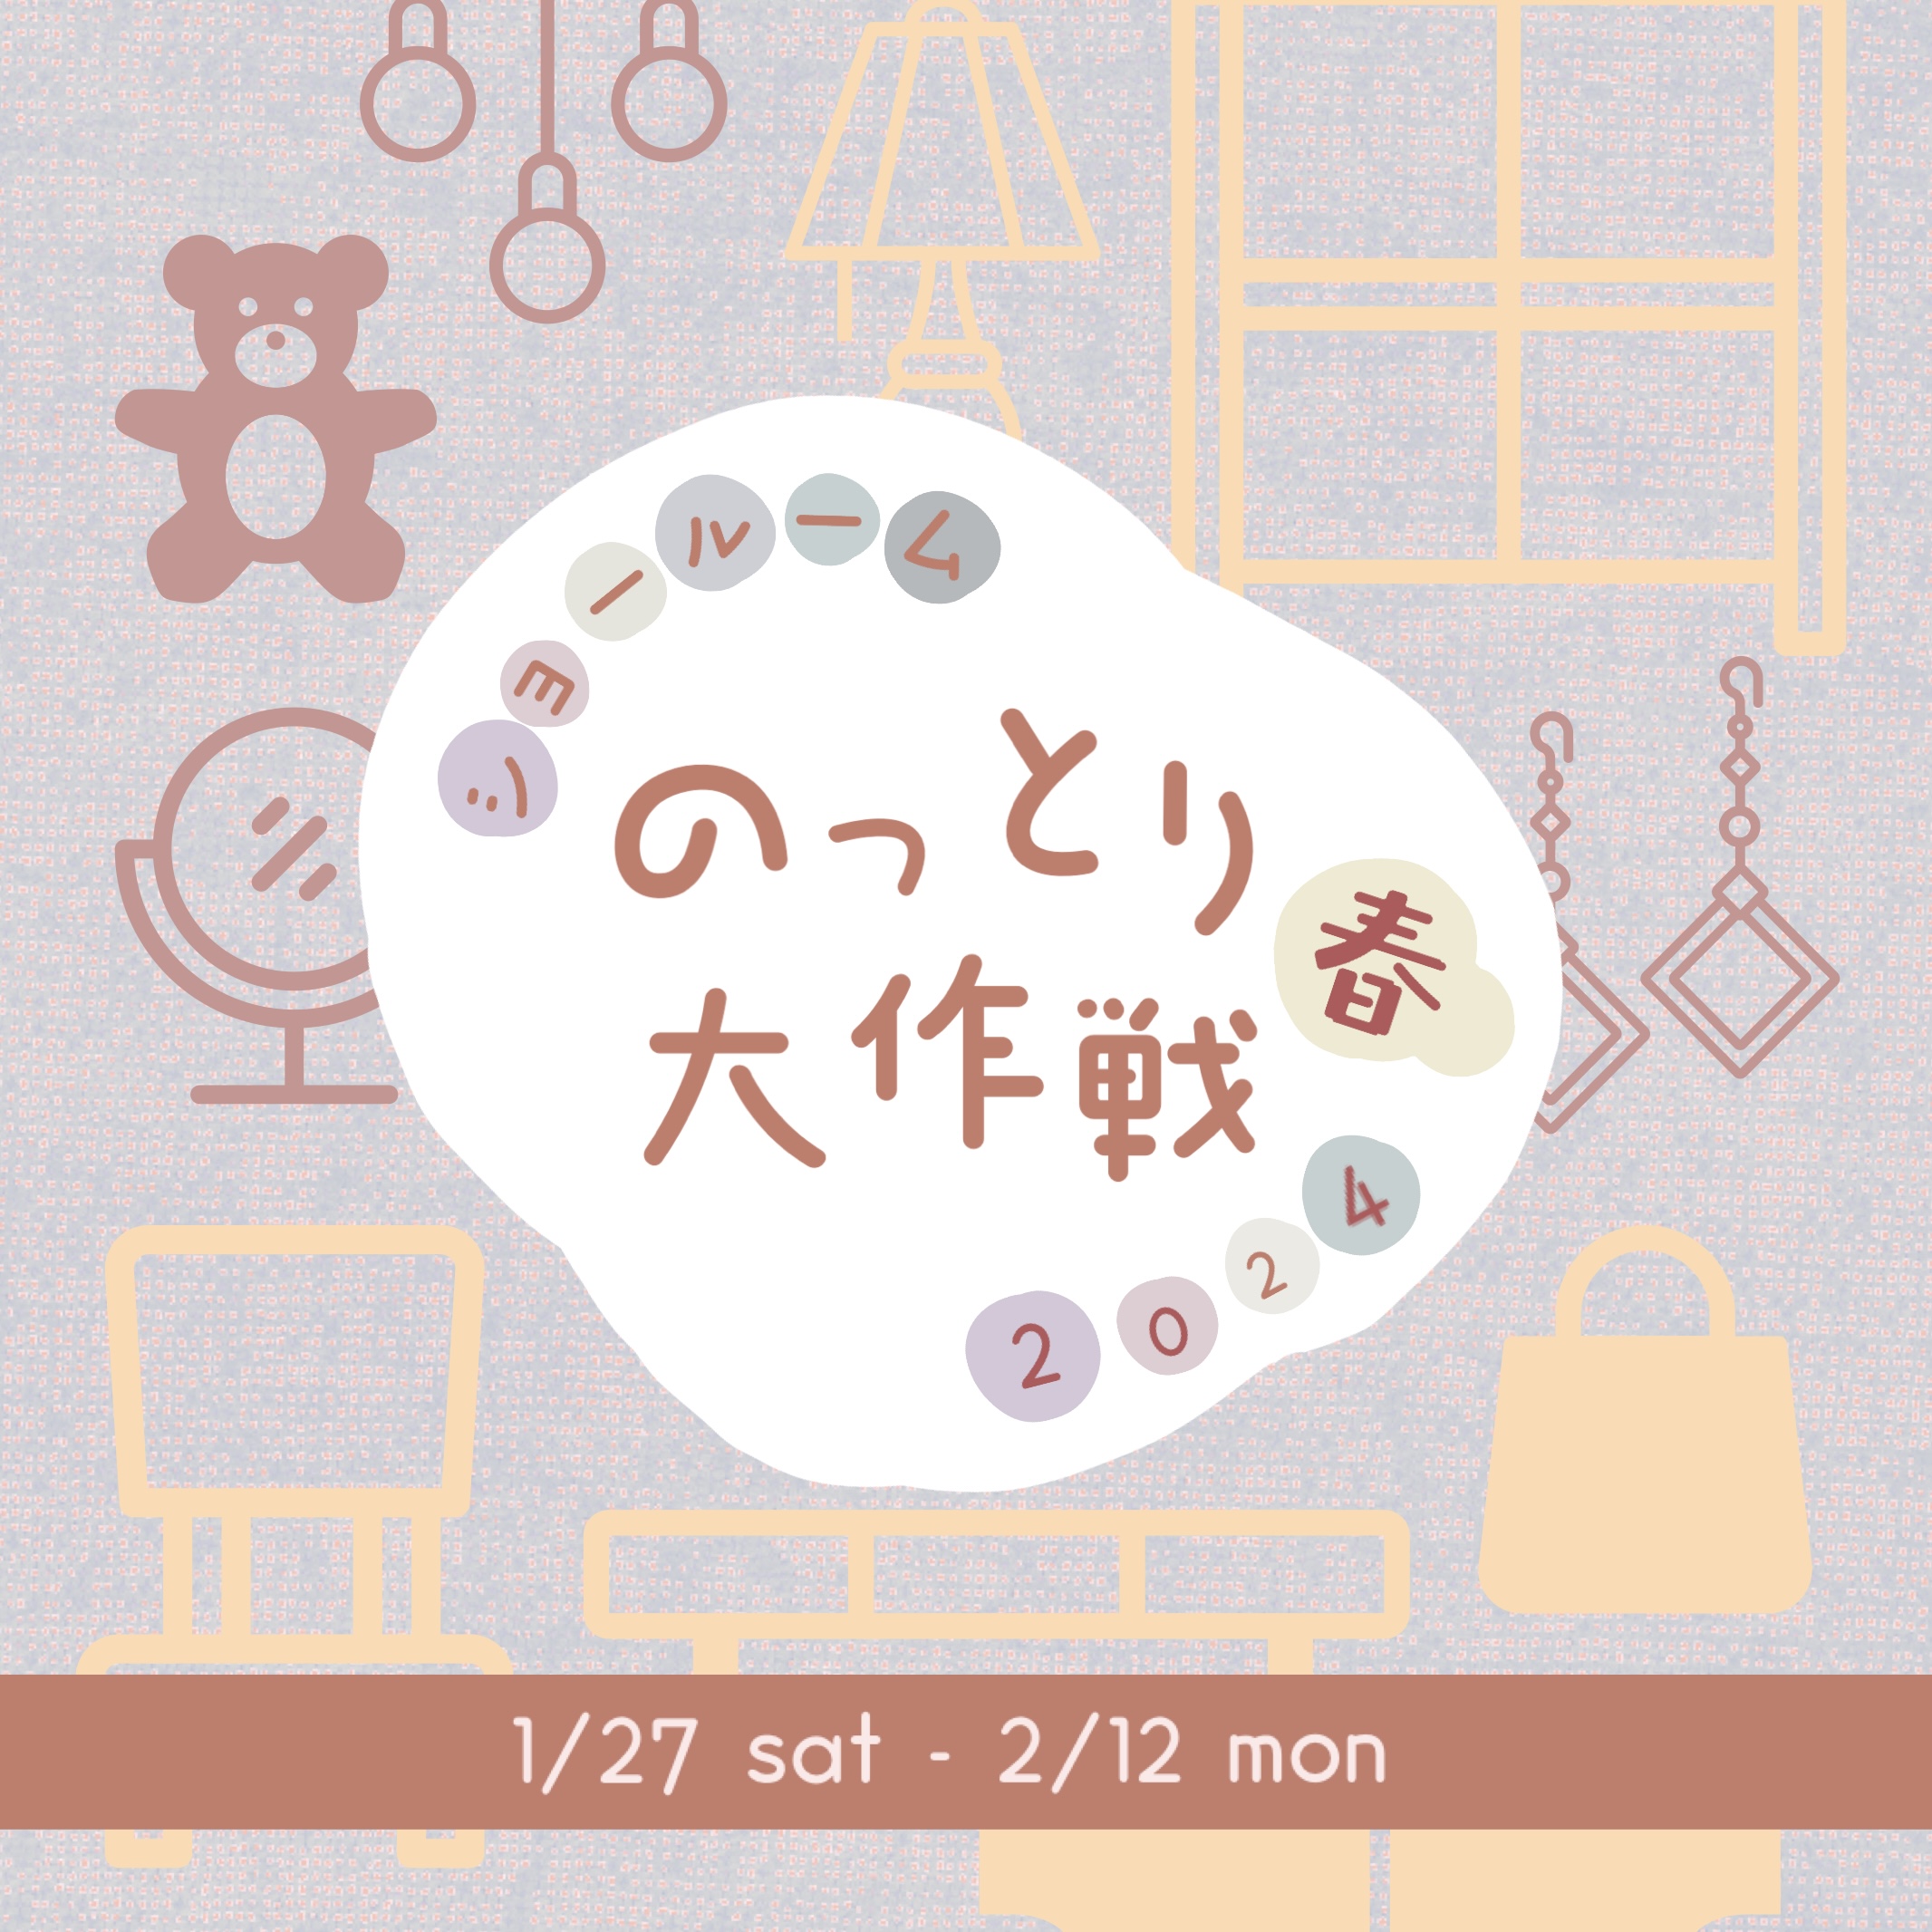 【event】1/27(土)〜2/12(月) 『ショールームのっとり大作戦 新春❶』開催中❃